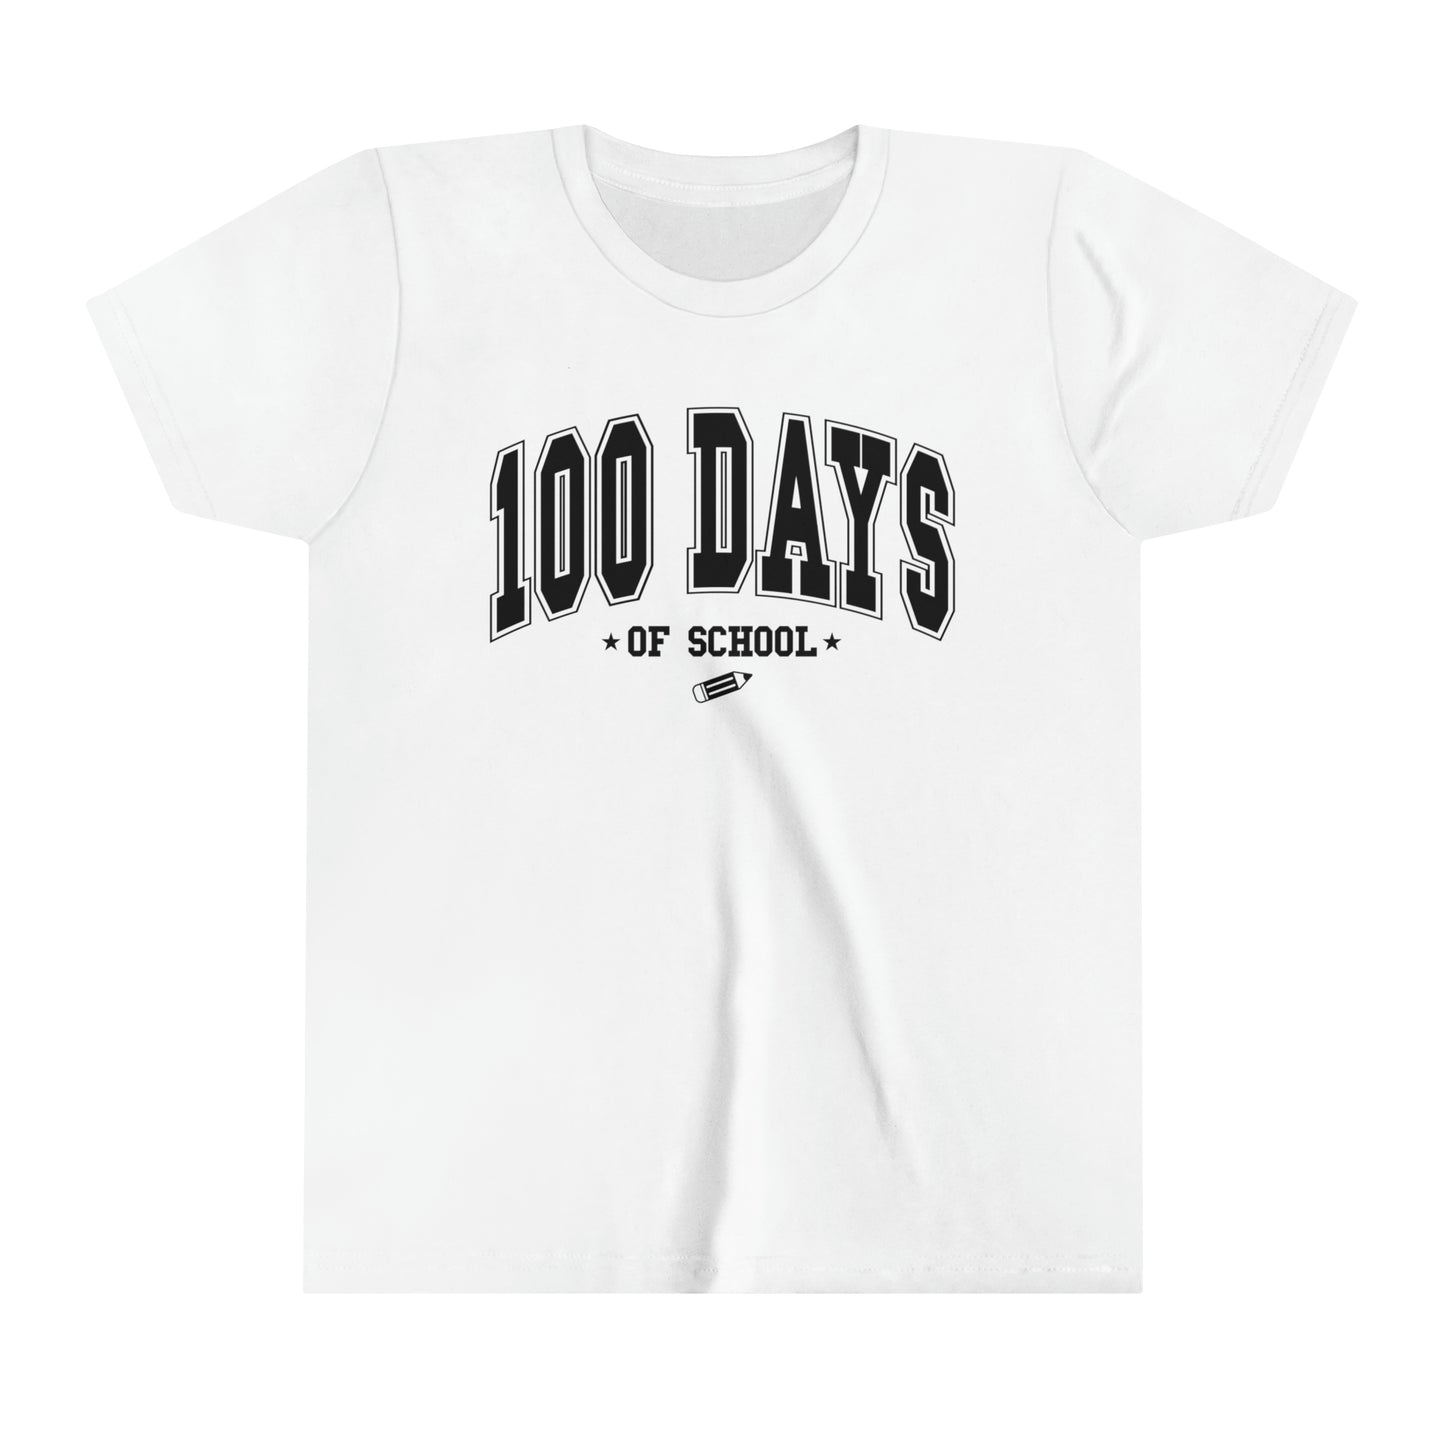 100 Days of School Boy's and Girl's Unisex Short Sleeve Tee